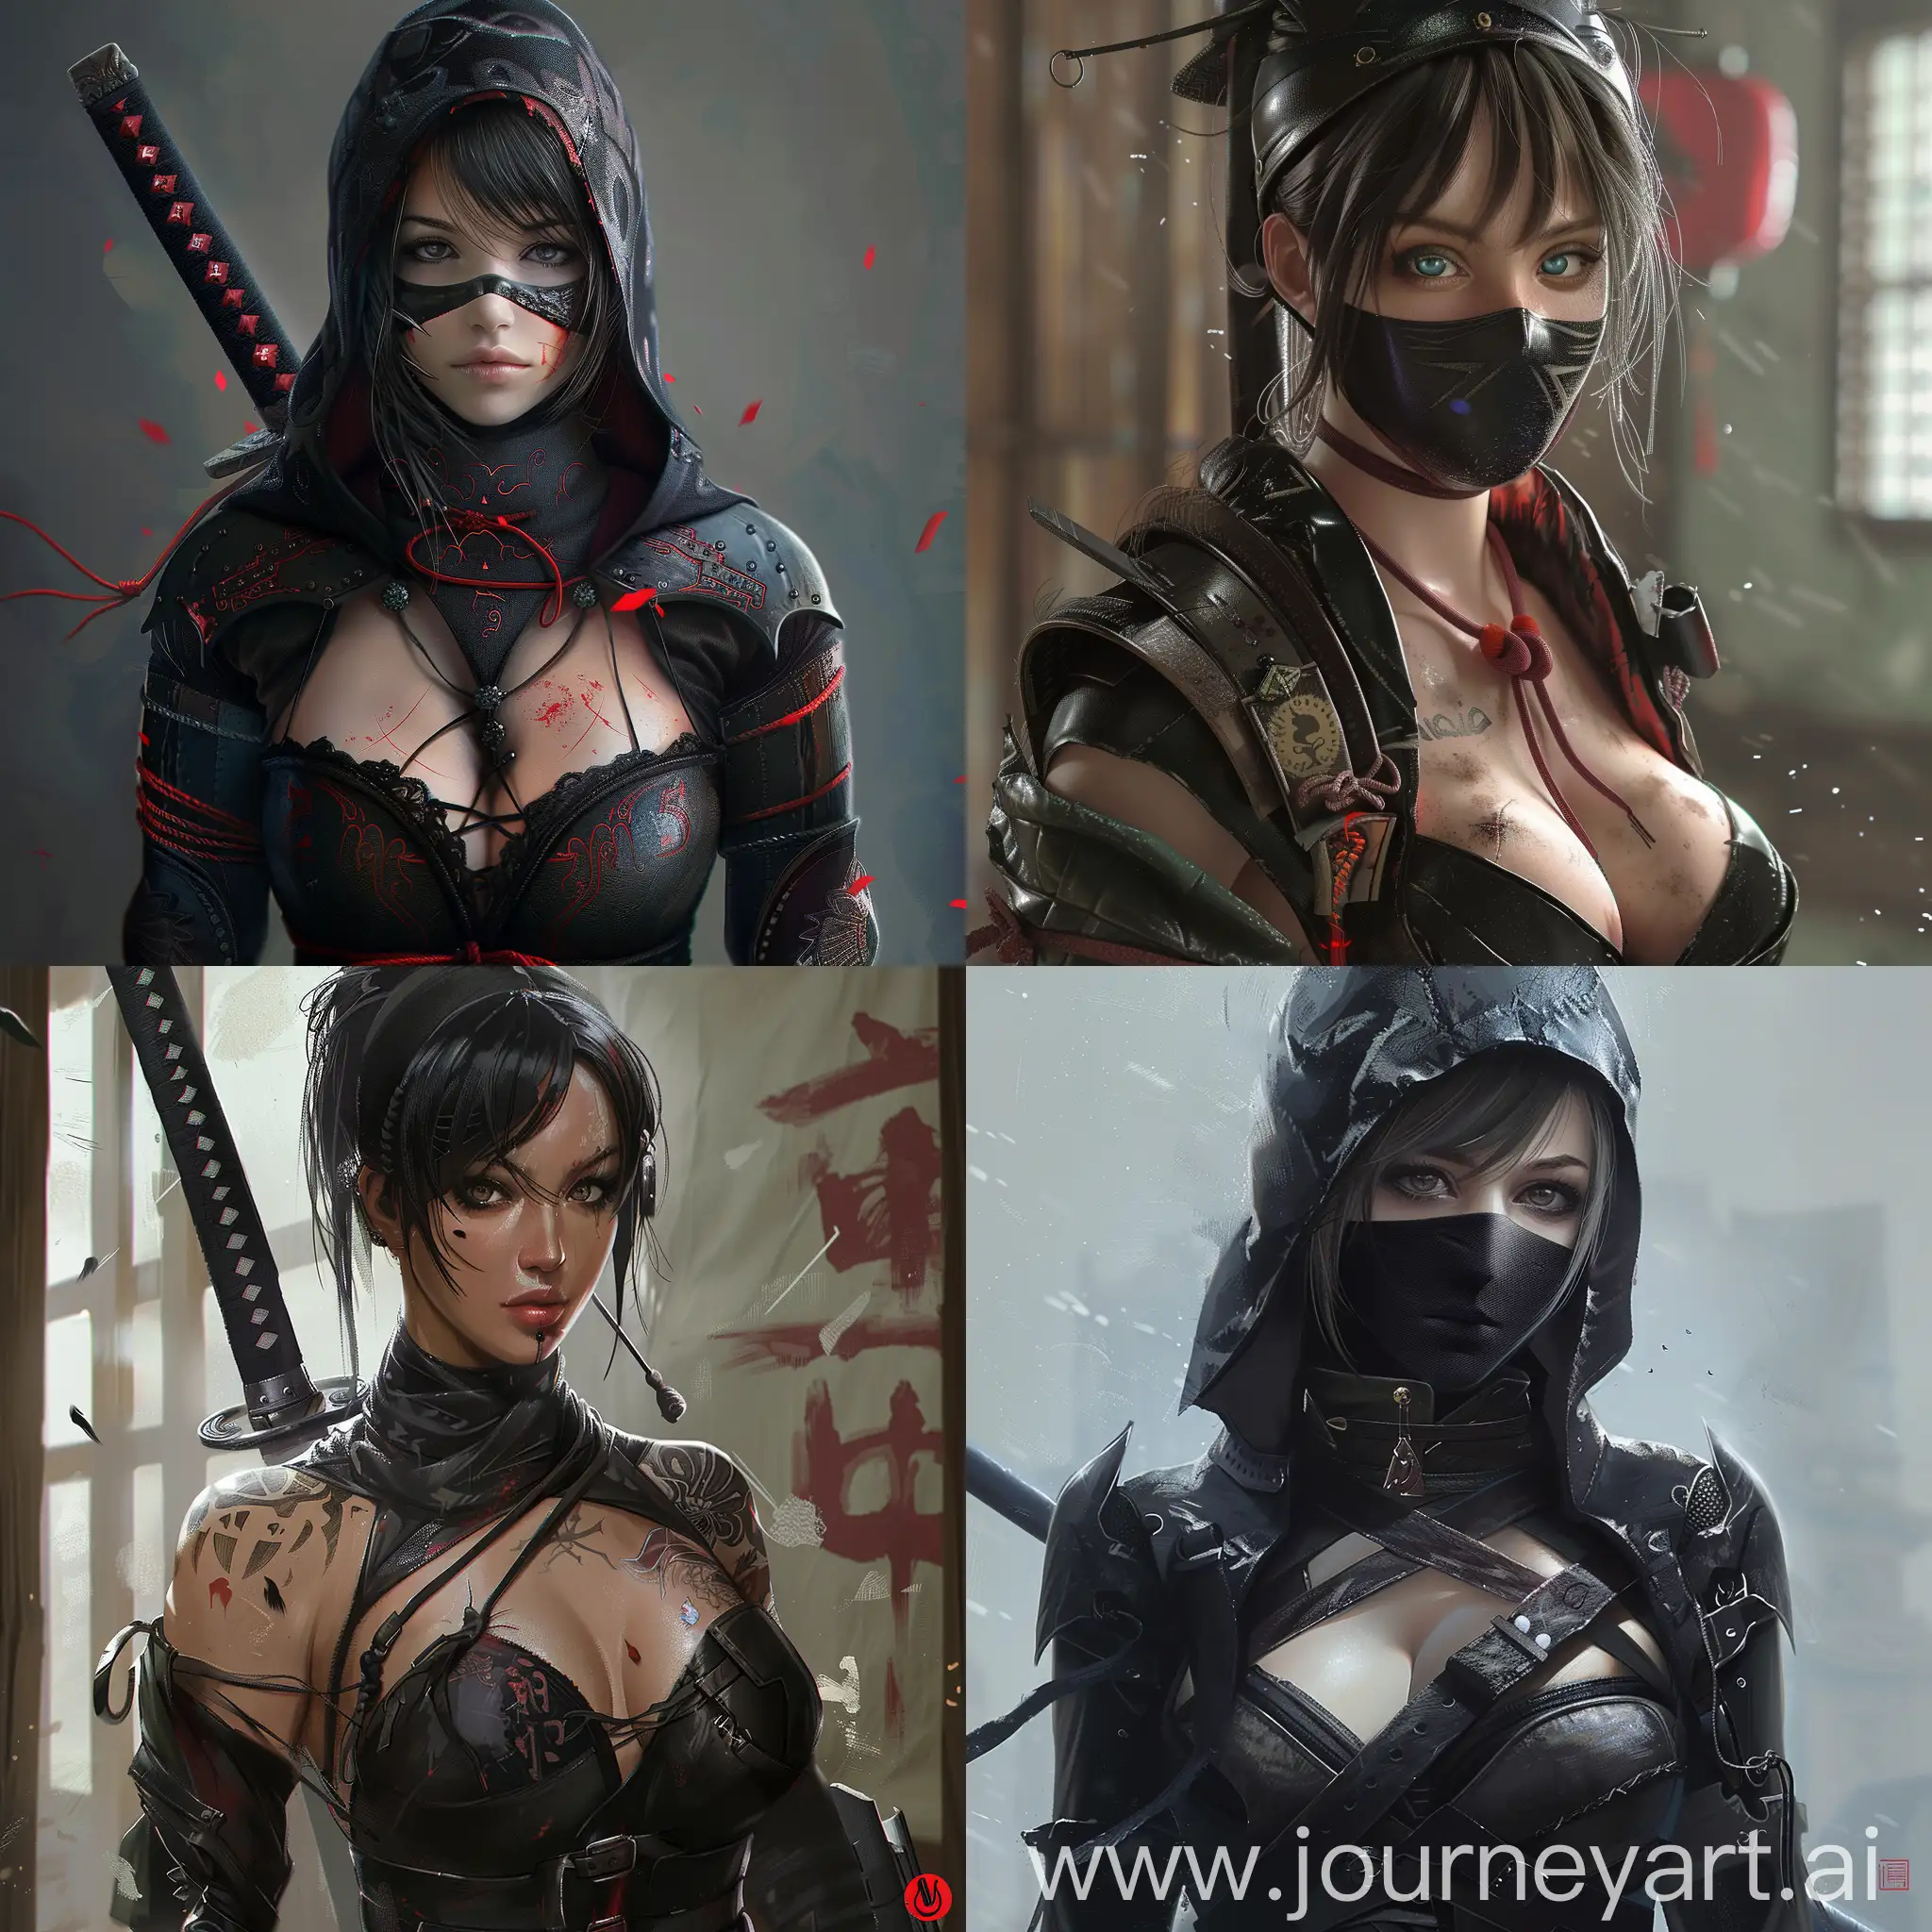 Realistic-Ninja-Assassin-Woman-in-Stunning-4K-Art